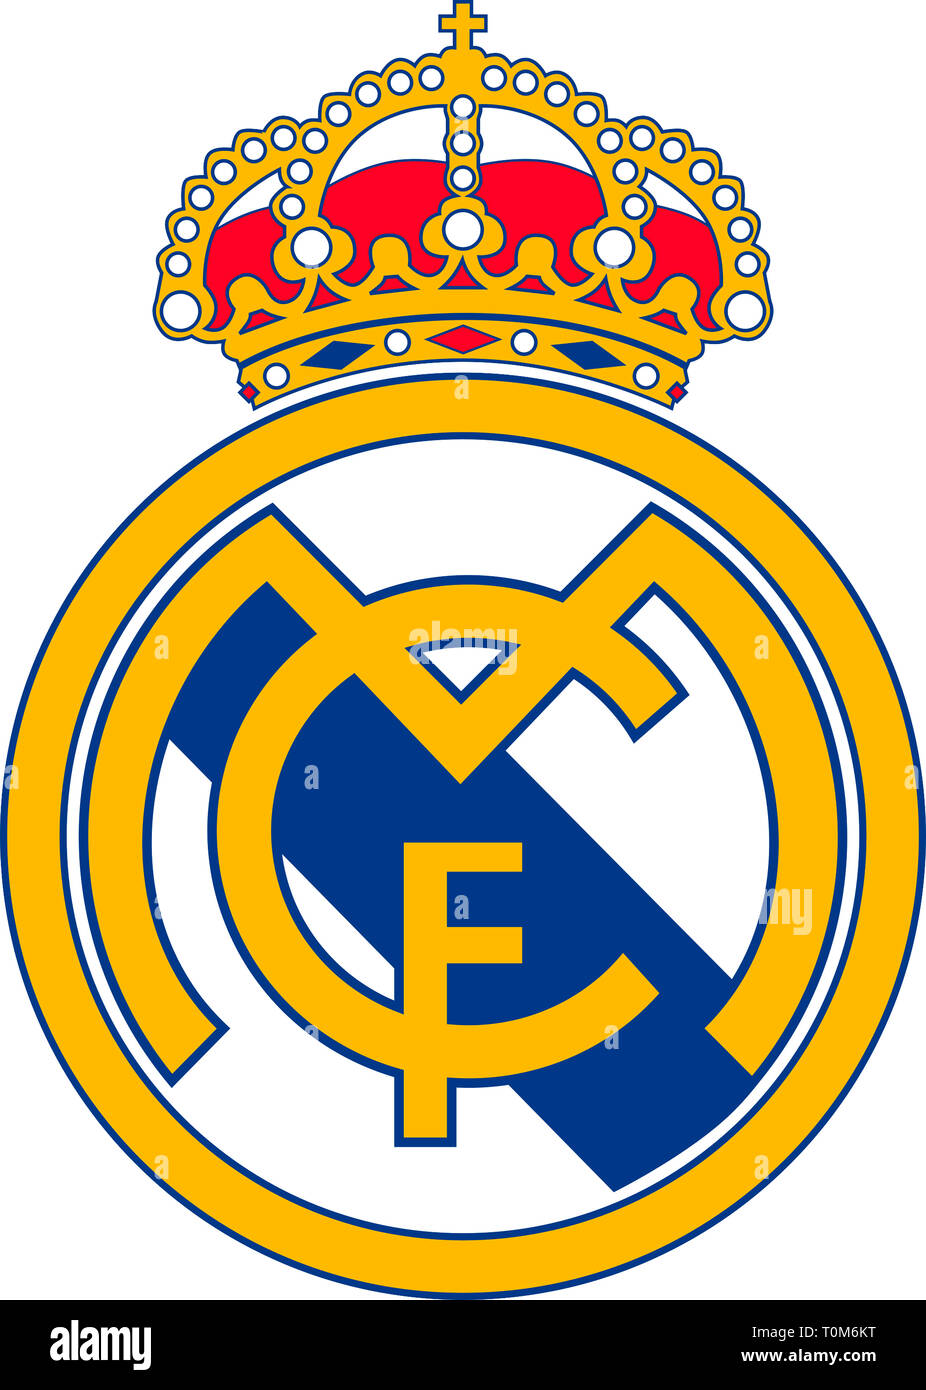 Logo of Spanish football team Real Madrid - Spain Stock Photo - Alamy